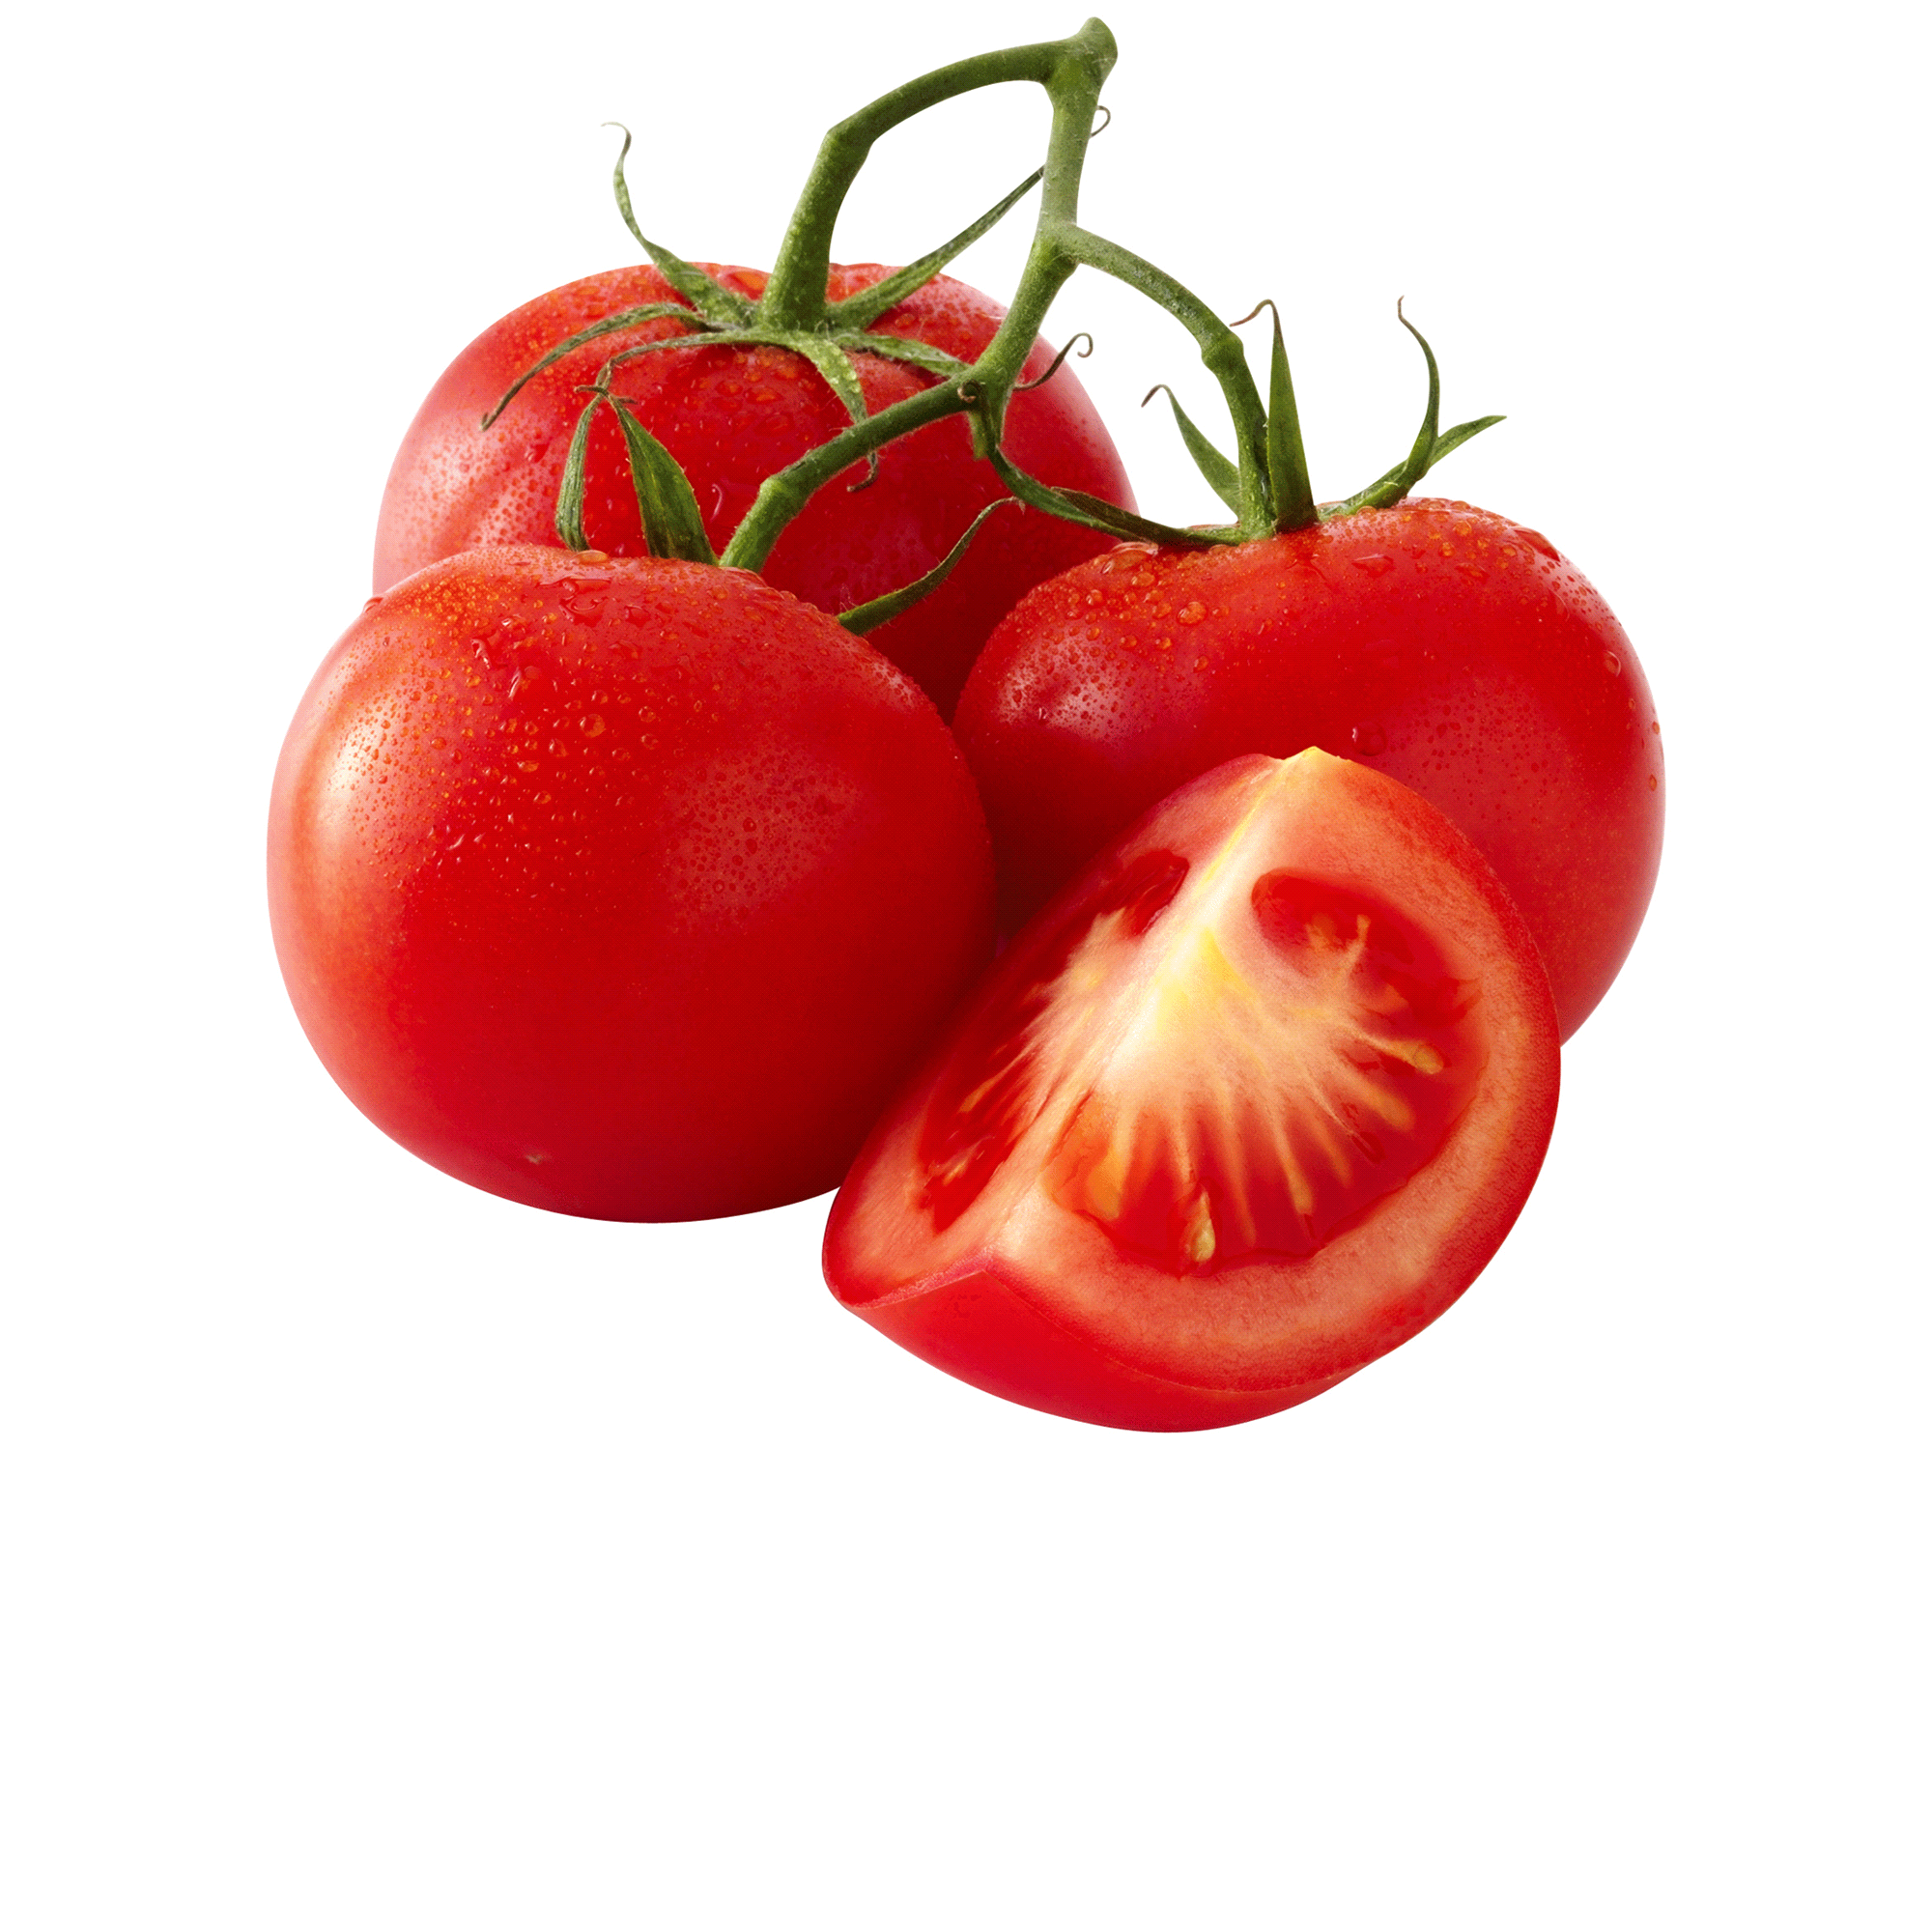 Tomatoes On The Vine | Meijer.com